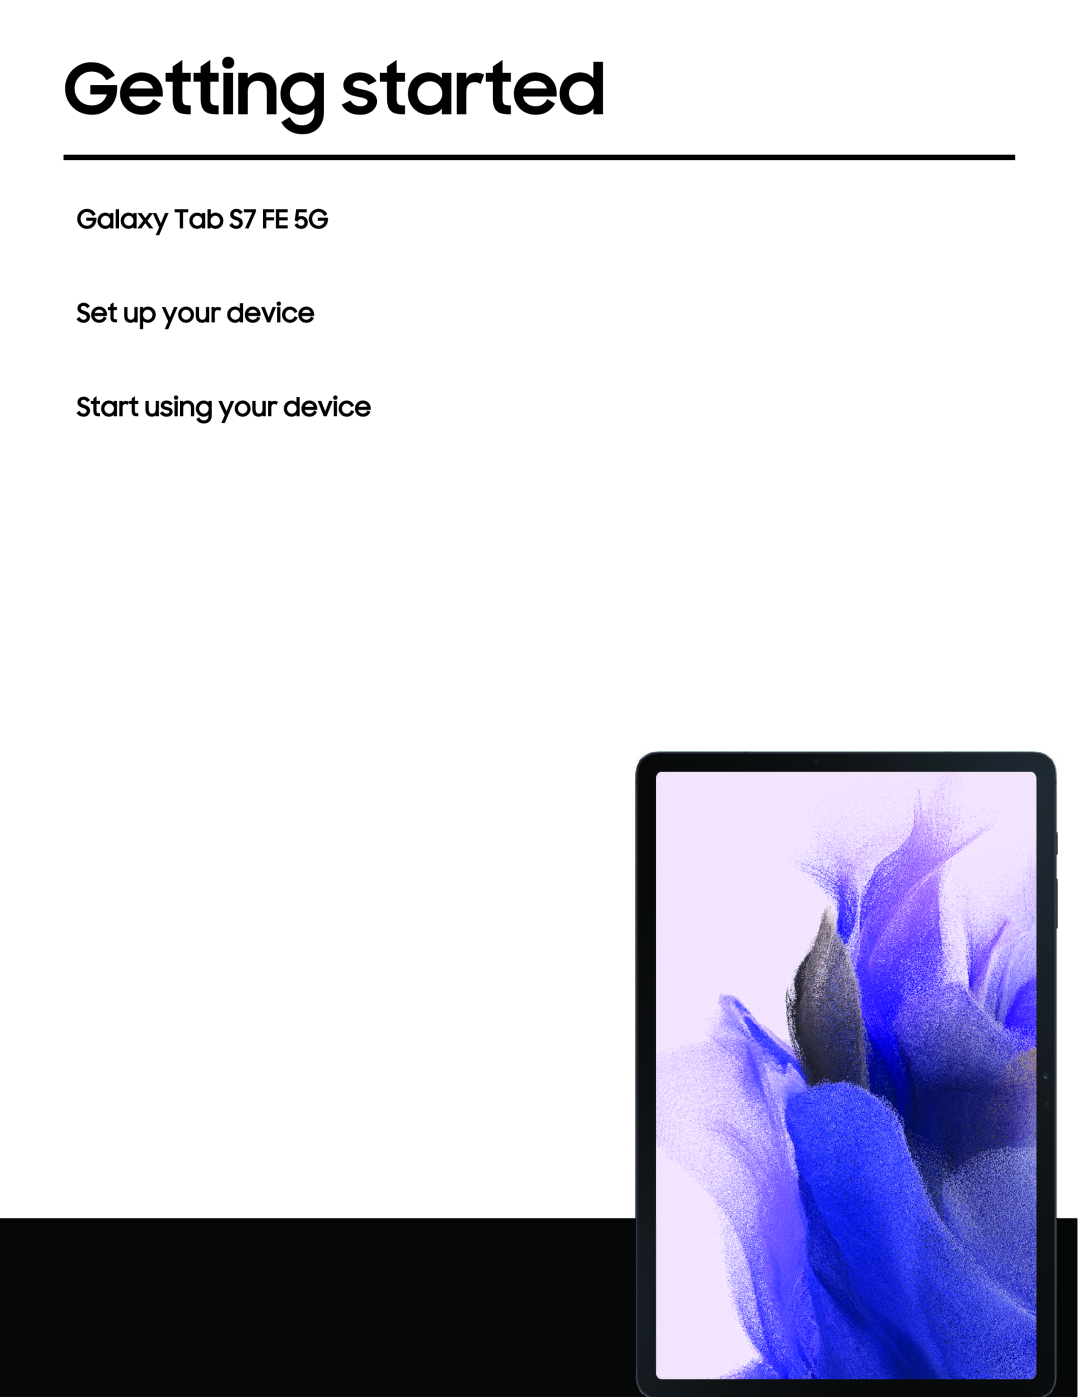 Getting started Galaxy Tab S7 FE Verizon